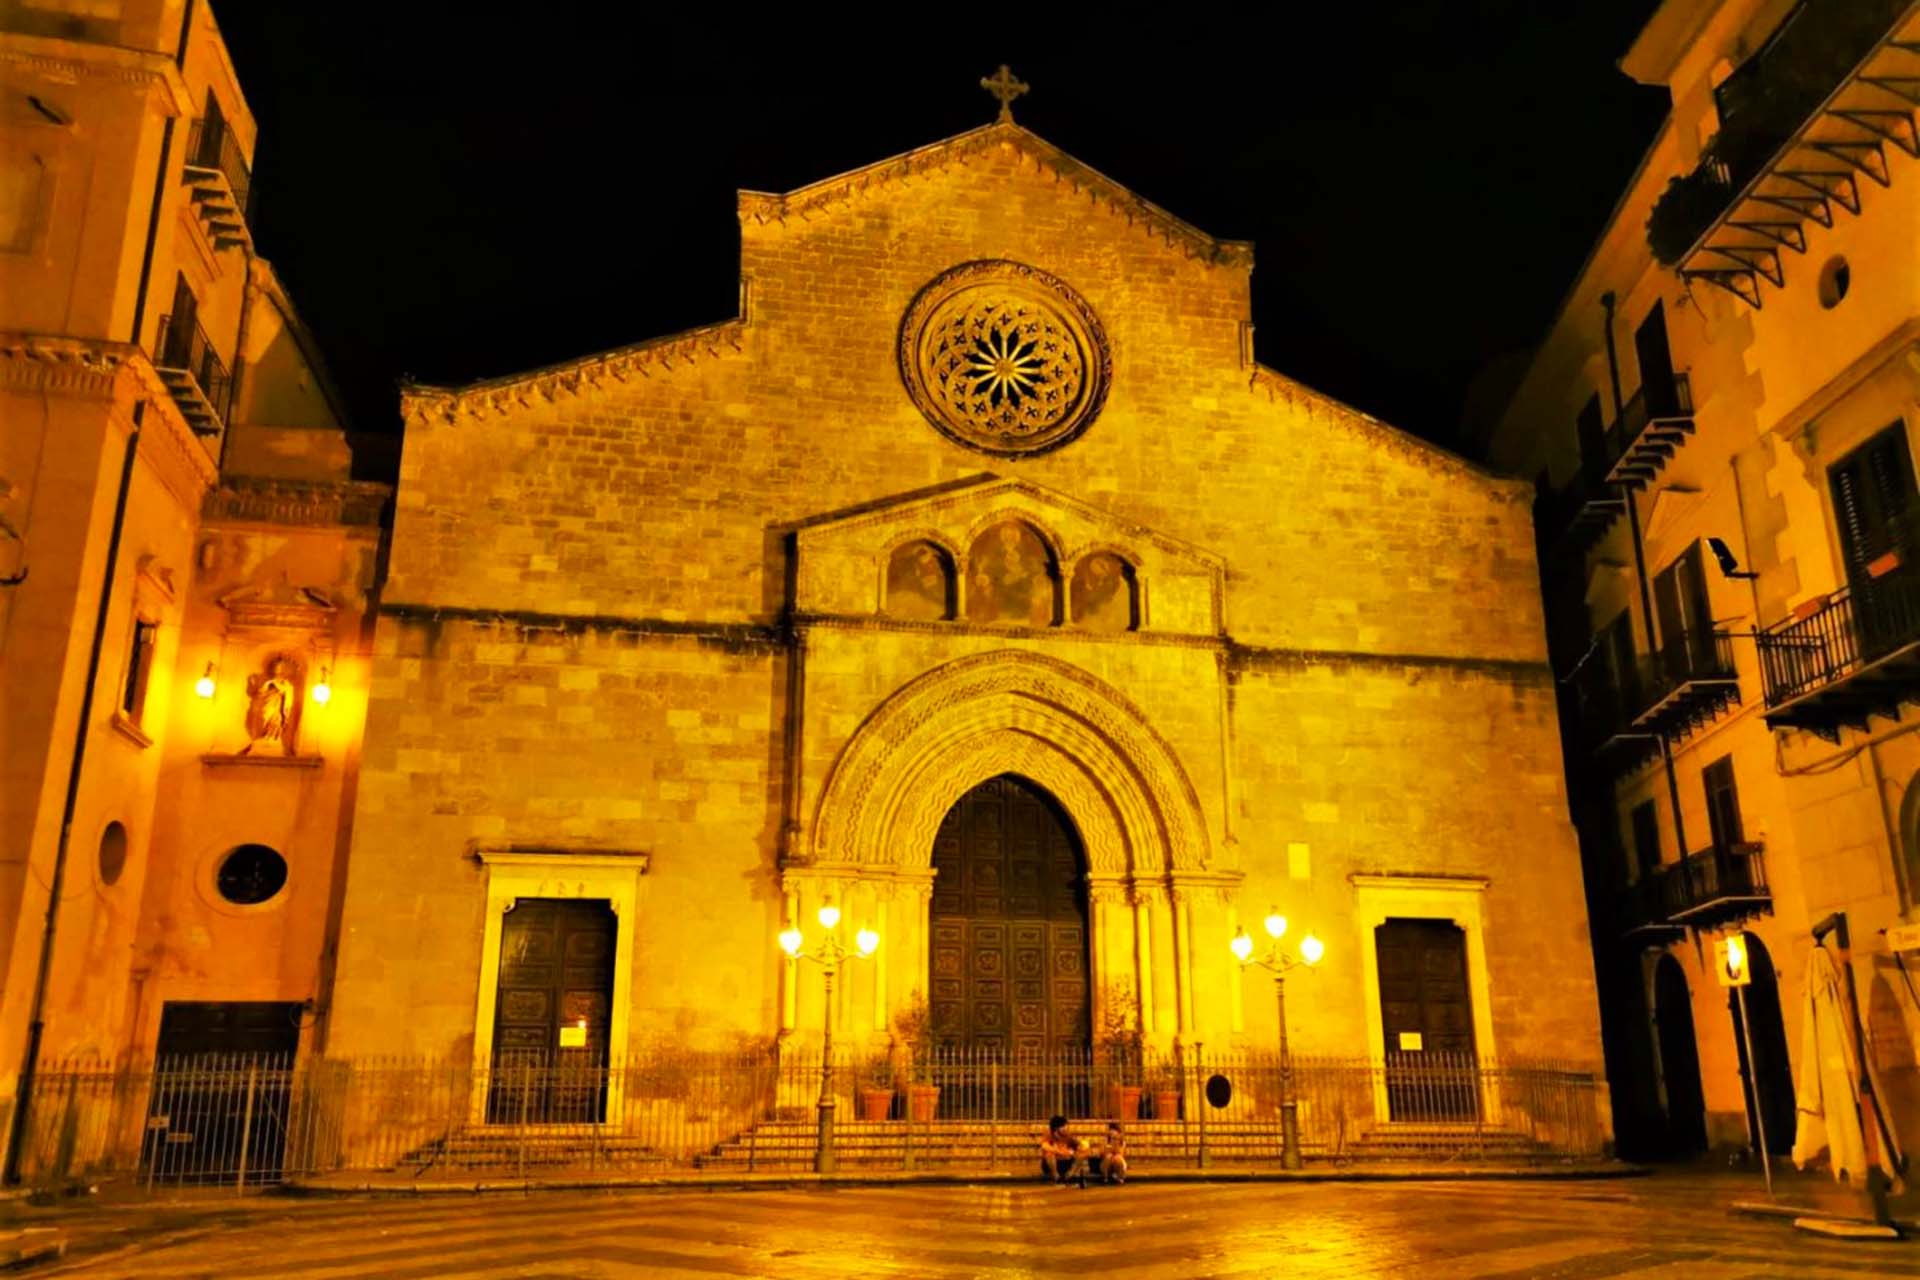 church of San Francesco in Palermo at night